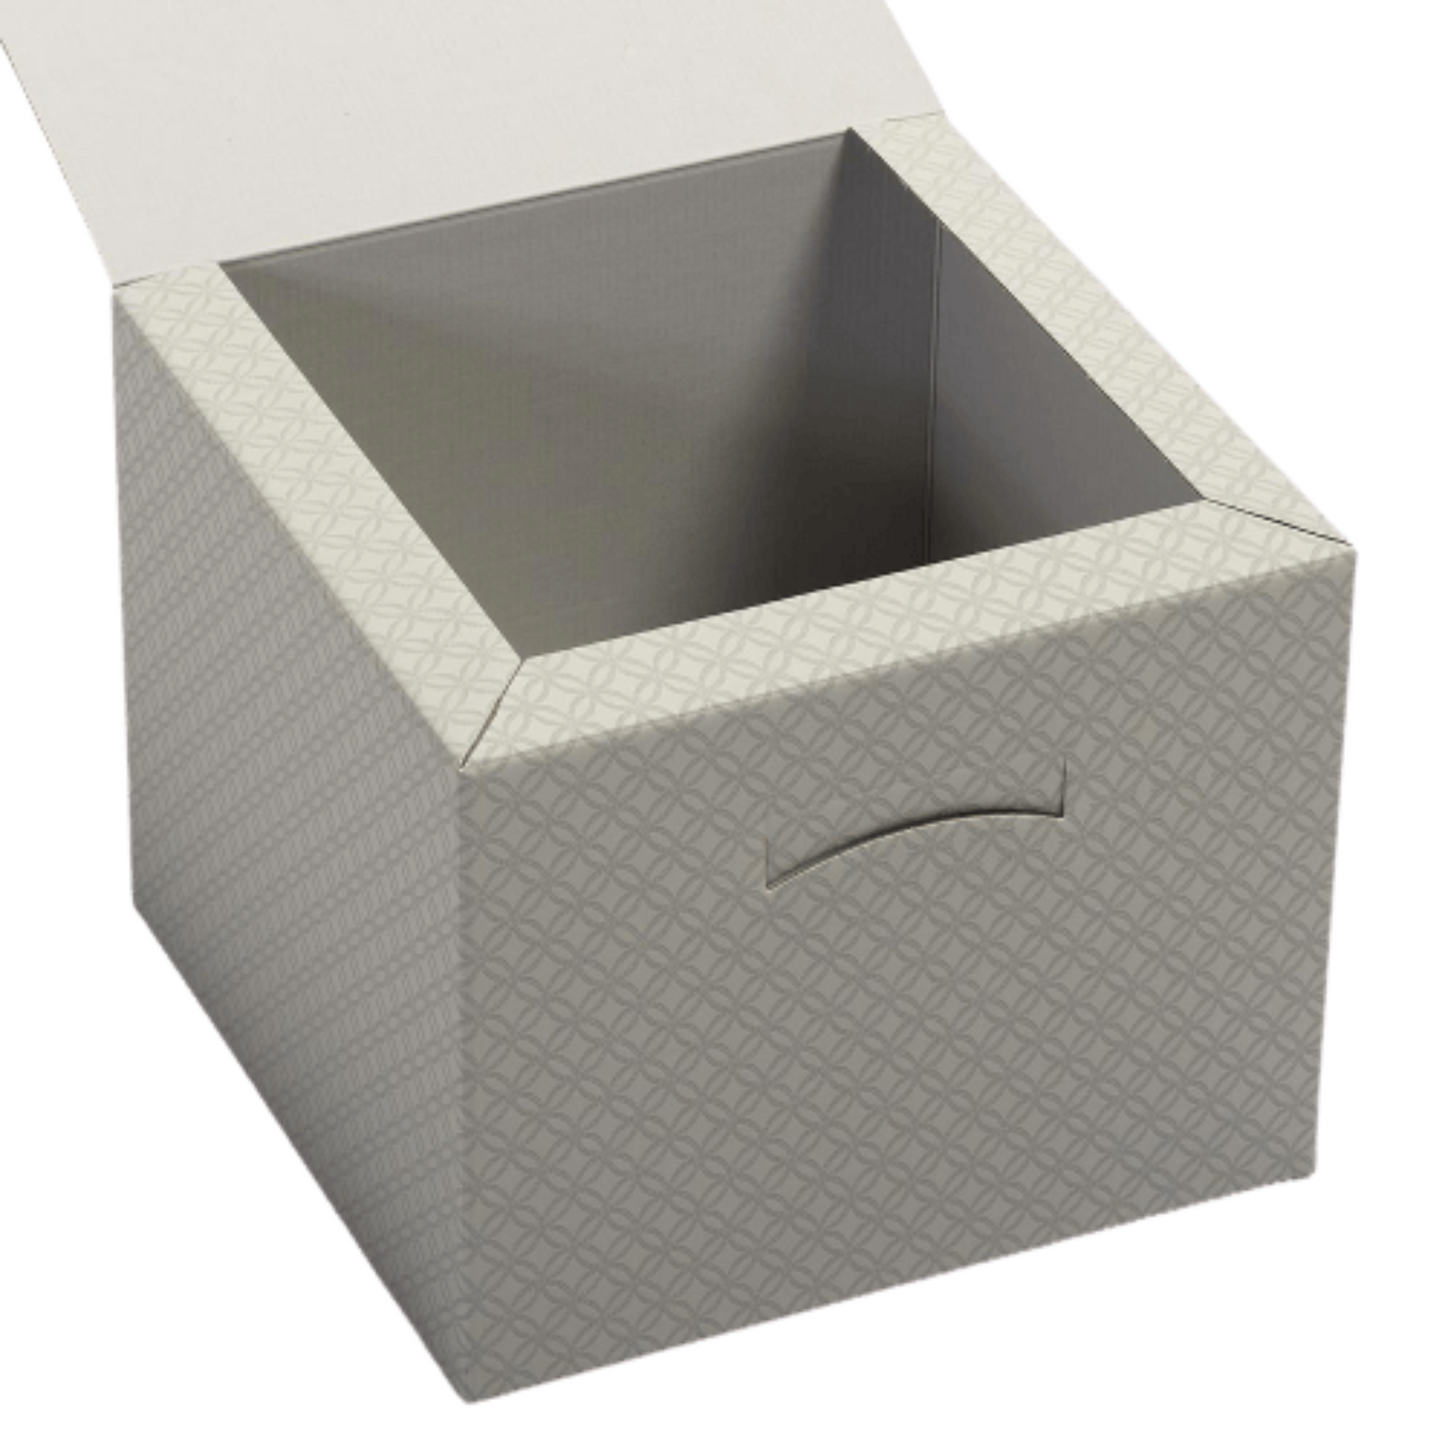 Large Grey Cube Gift Box.  Size 30 x 30 x 24 cm